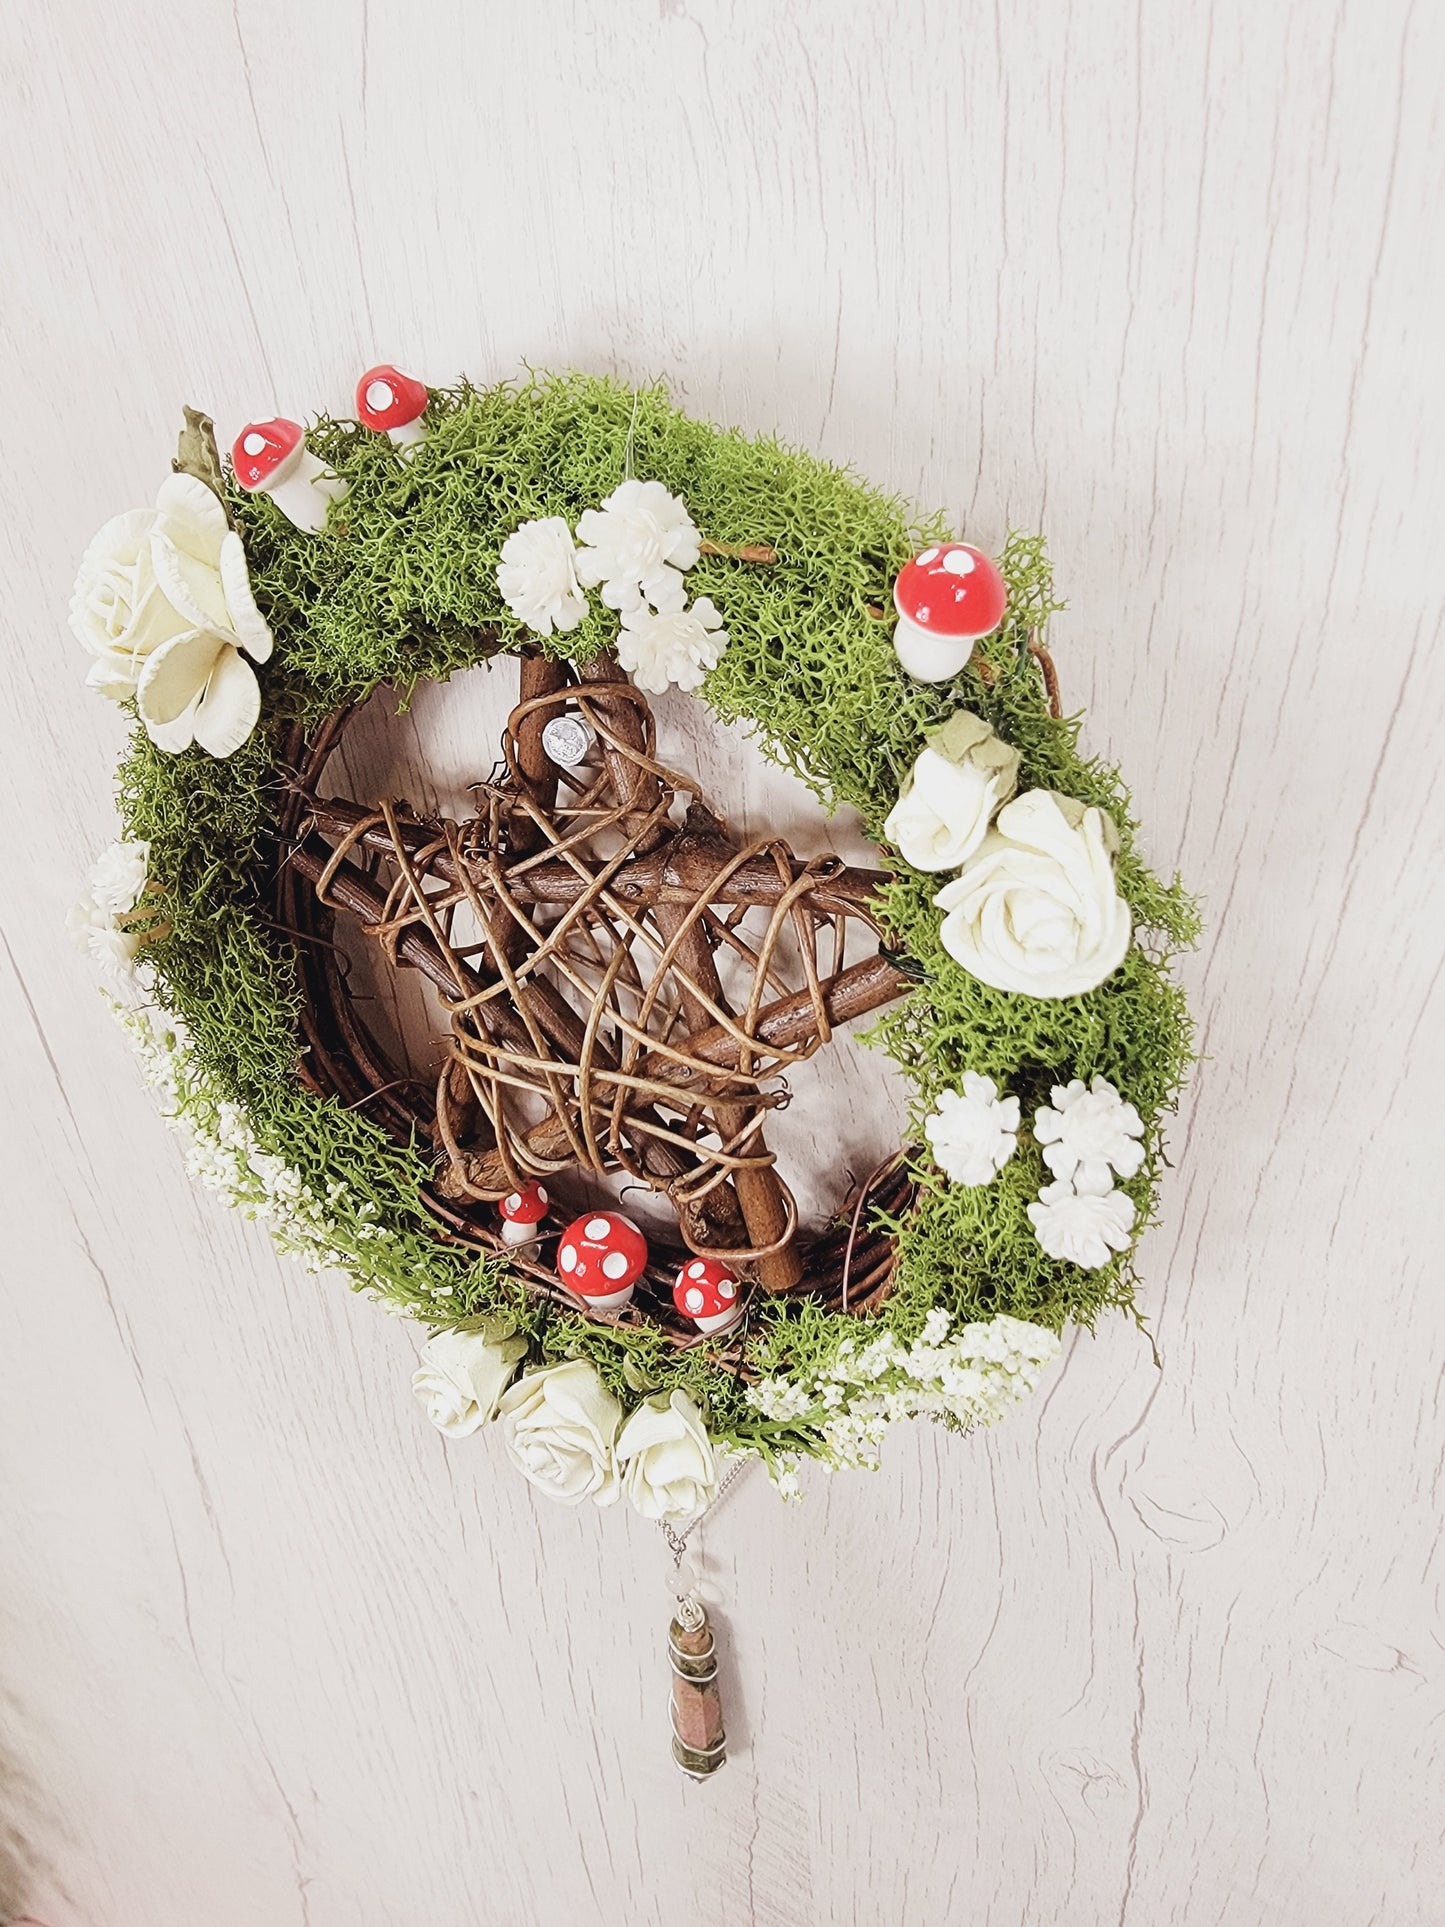 Pentagram Wreath with Mushrooms